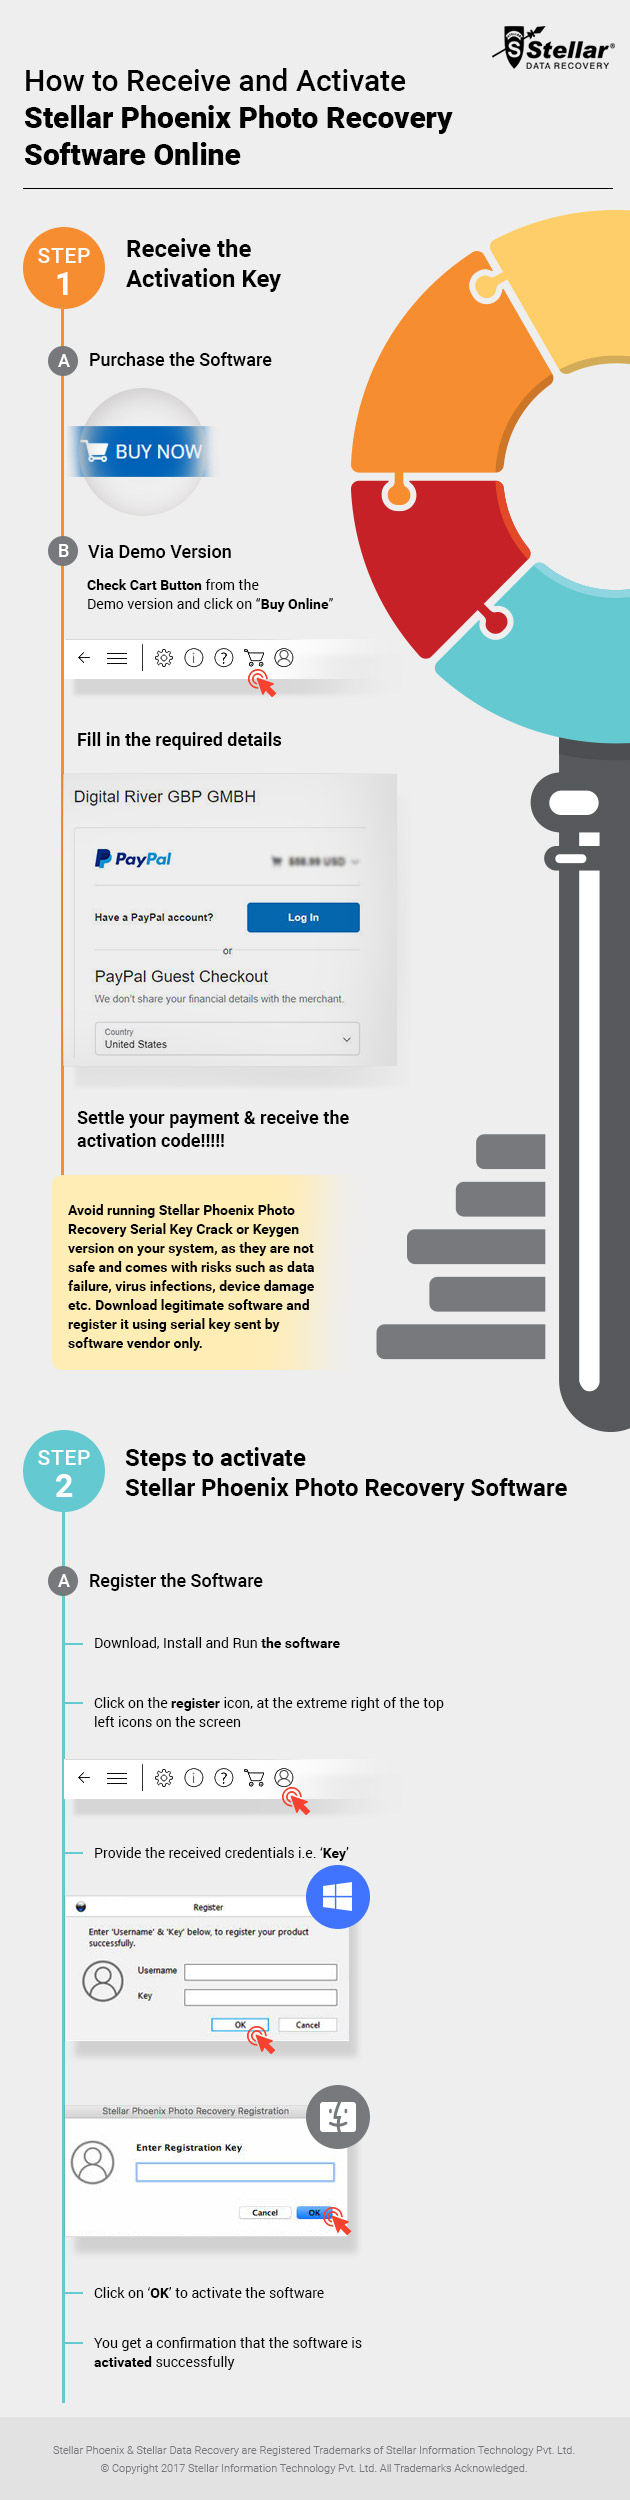 stellar photo recovery software free registration key